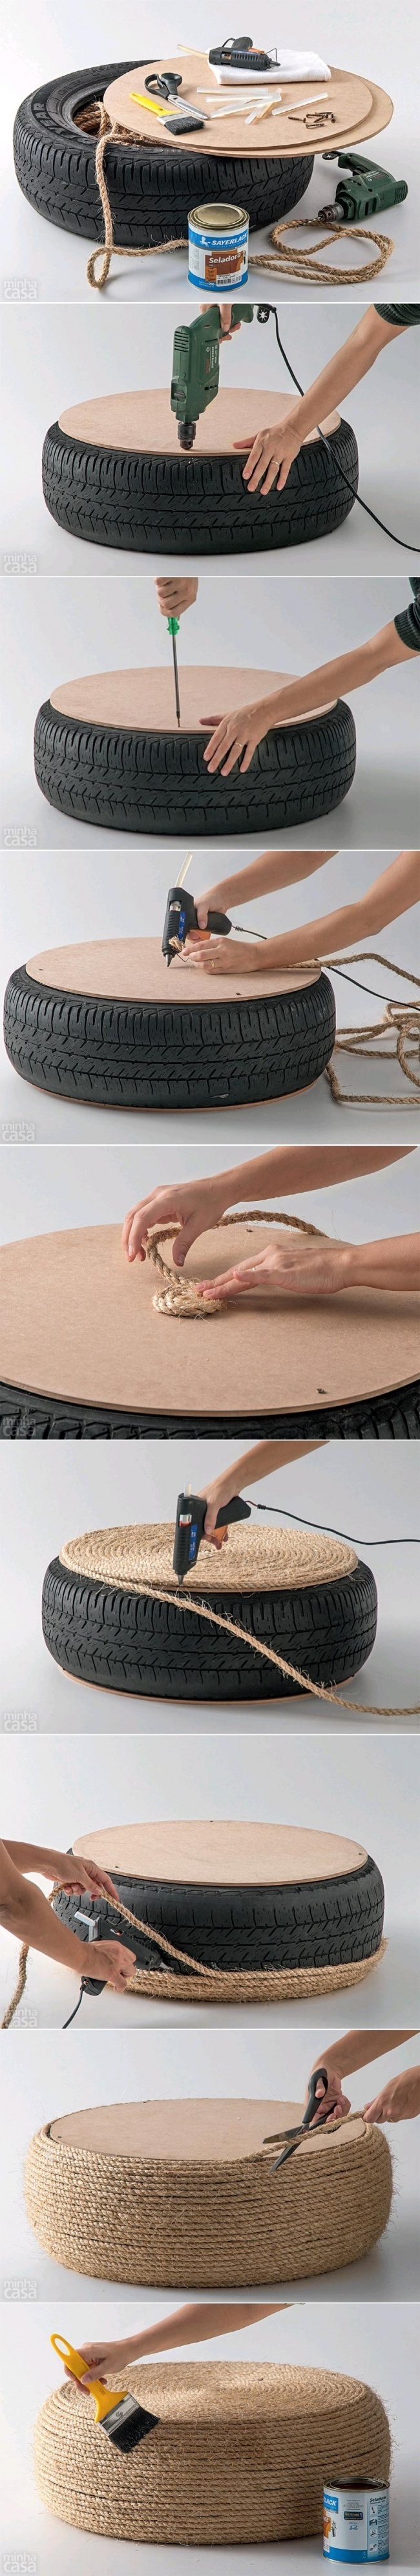 DIY Tire Ottoman 18 Creative And Useful Popular DIY Ideas 